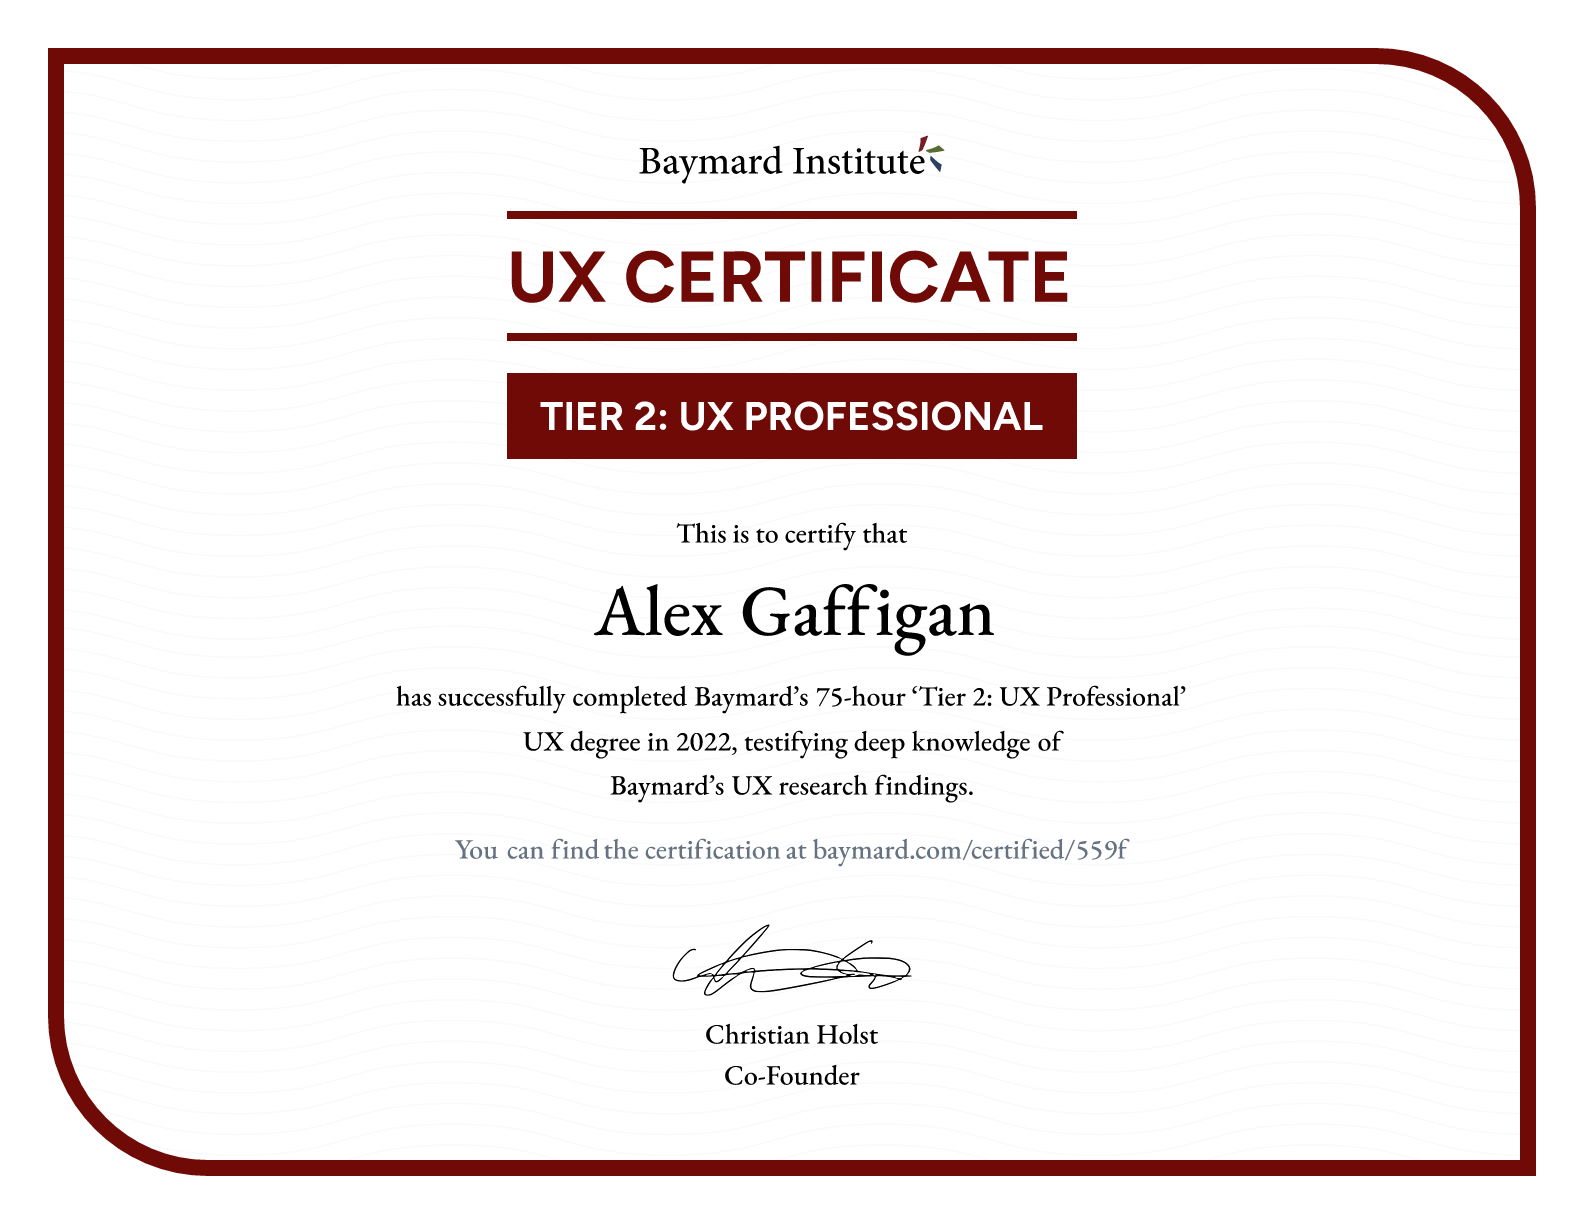 Alex Gaffigan’s certificate